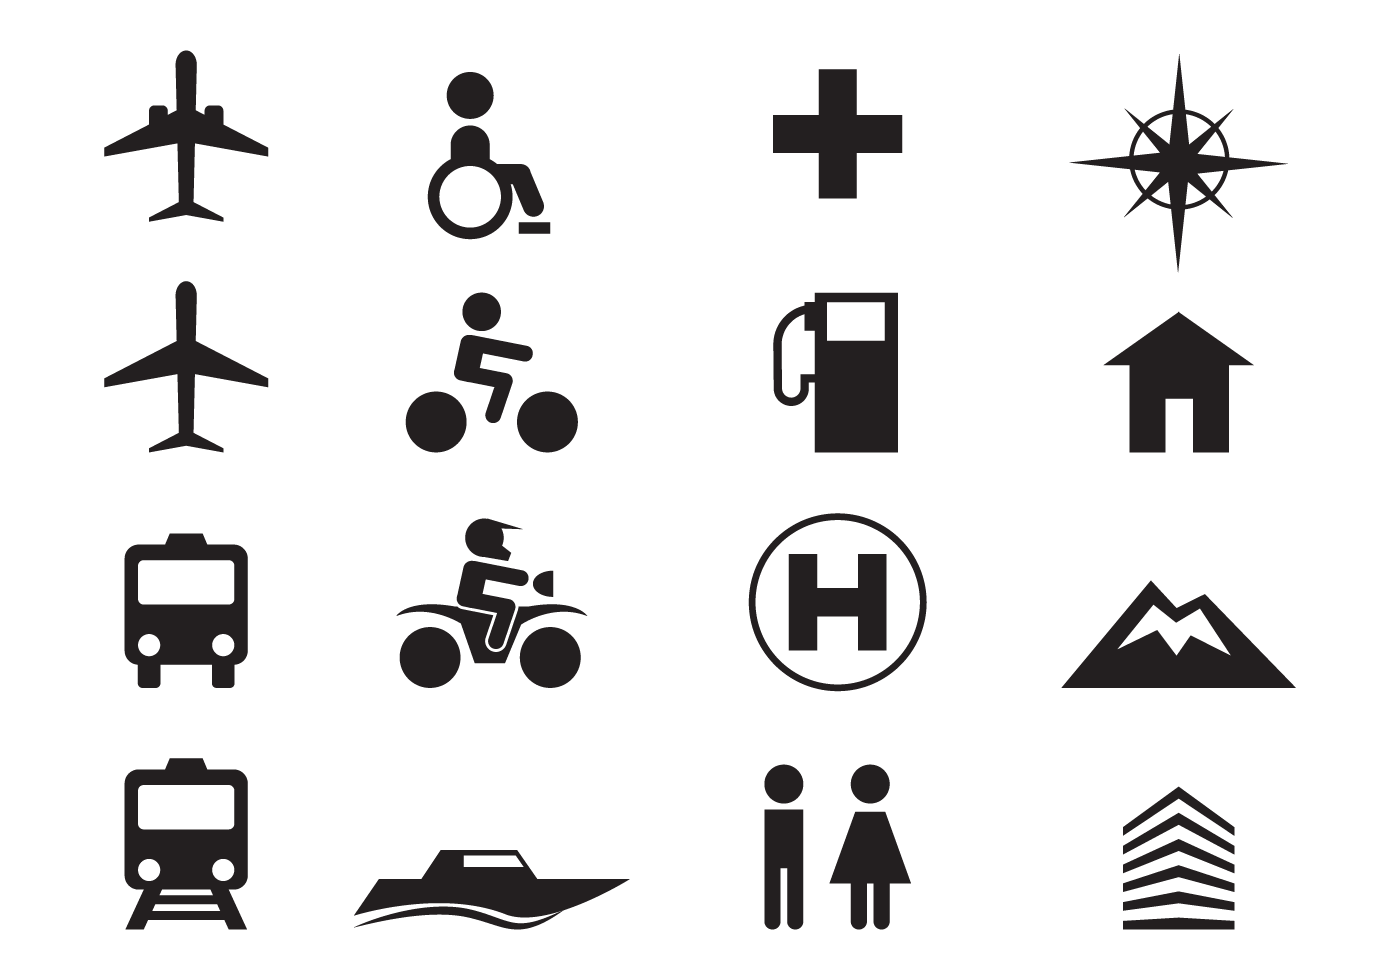 Example of symbols (Source: Vecteezy.com).